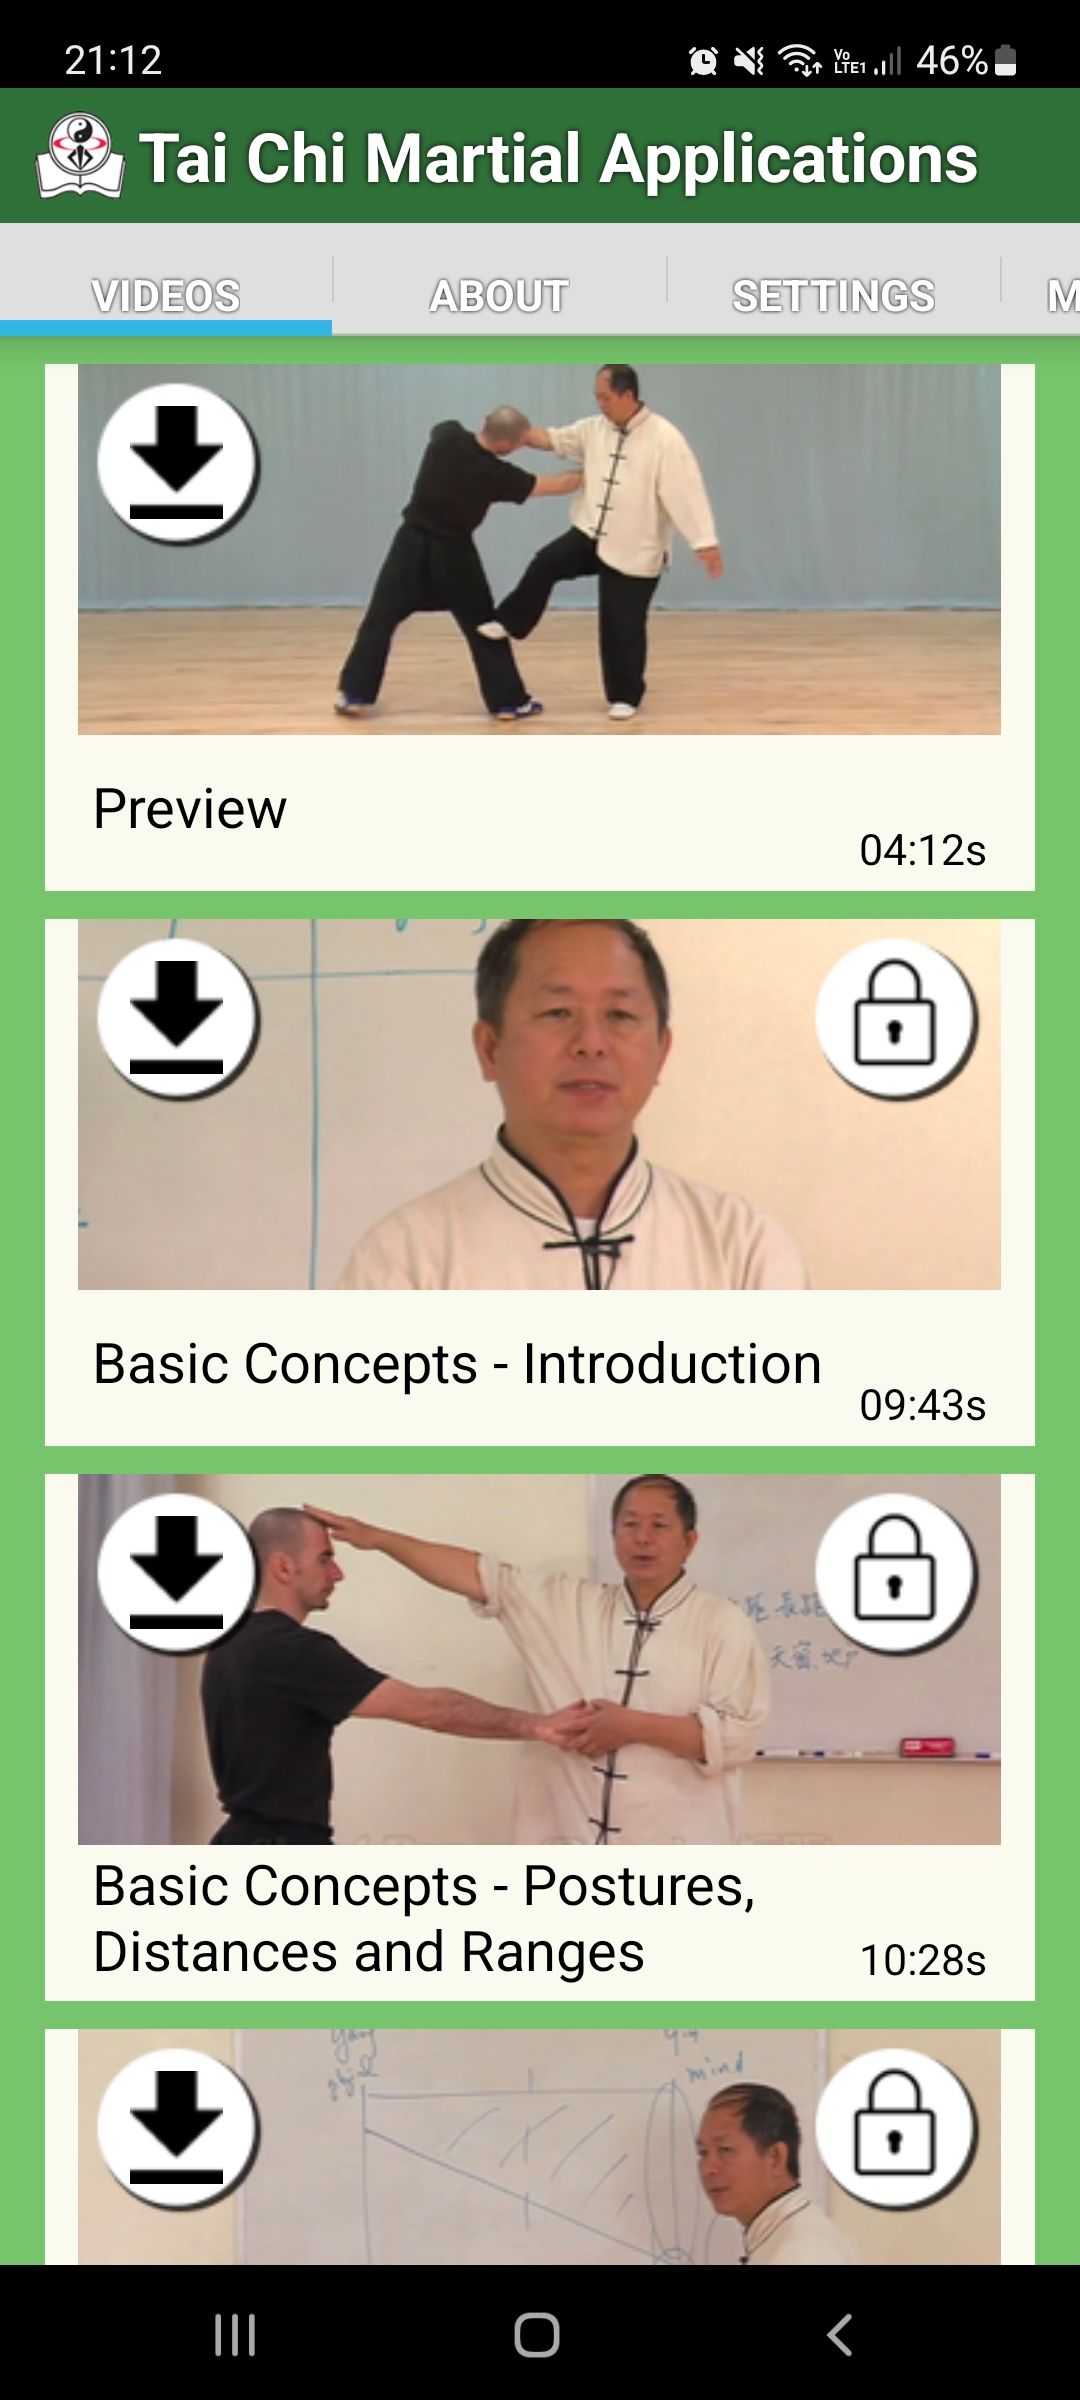 Tai Chi Martial Applications mobile app videos